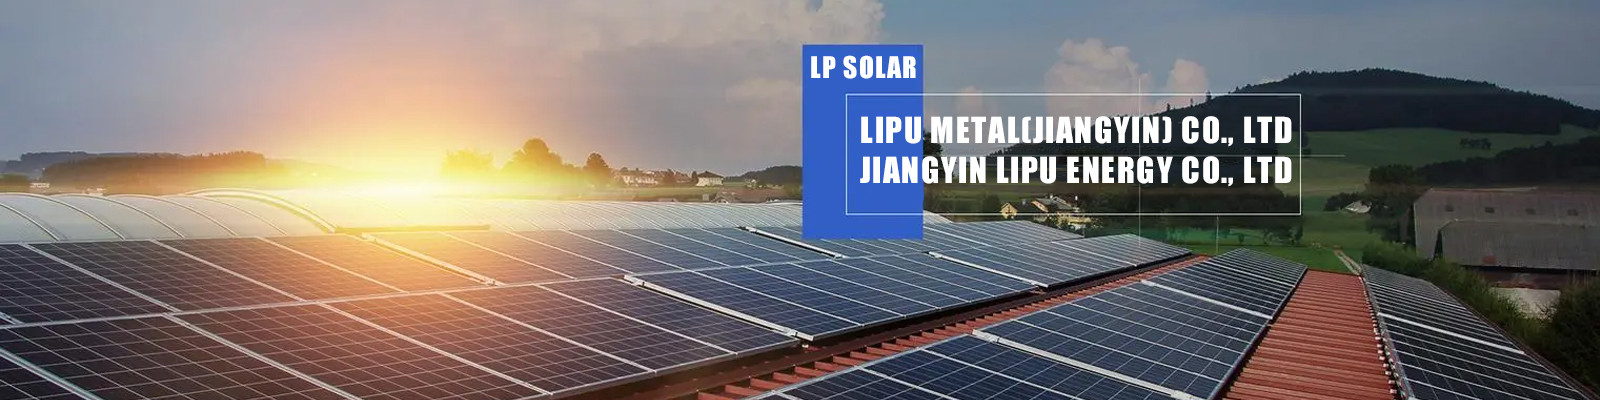 Metalldach-Solarbefestigungssystem